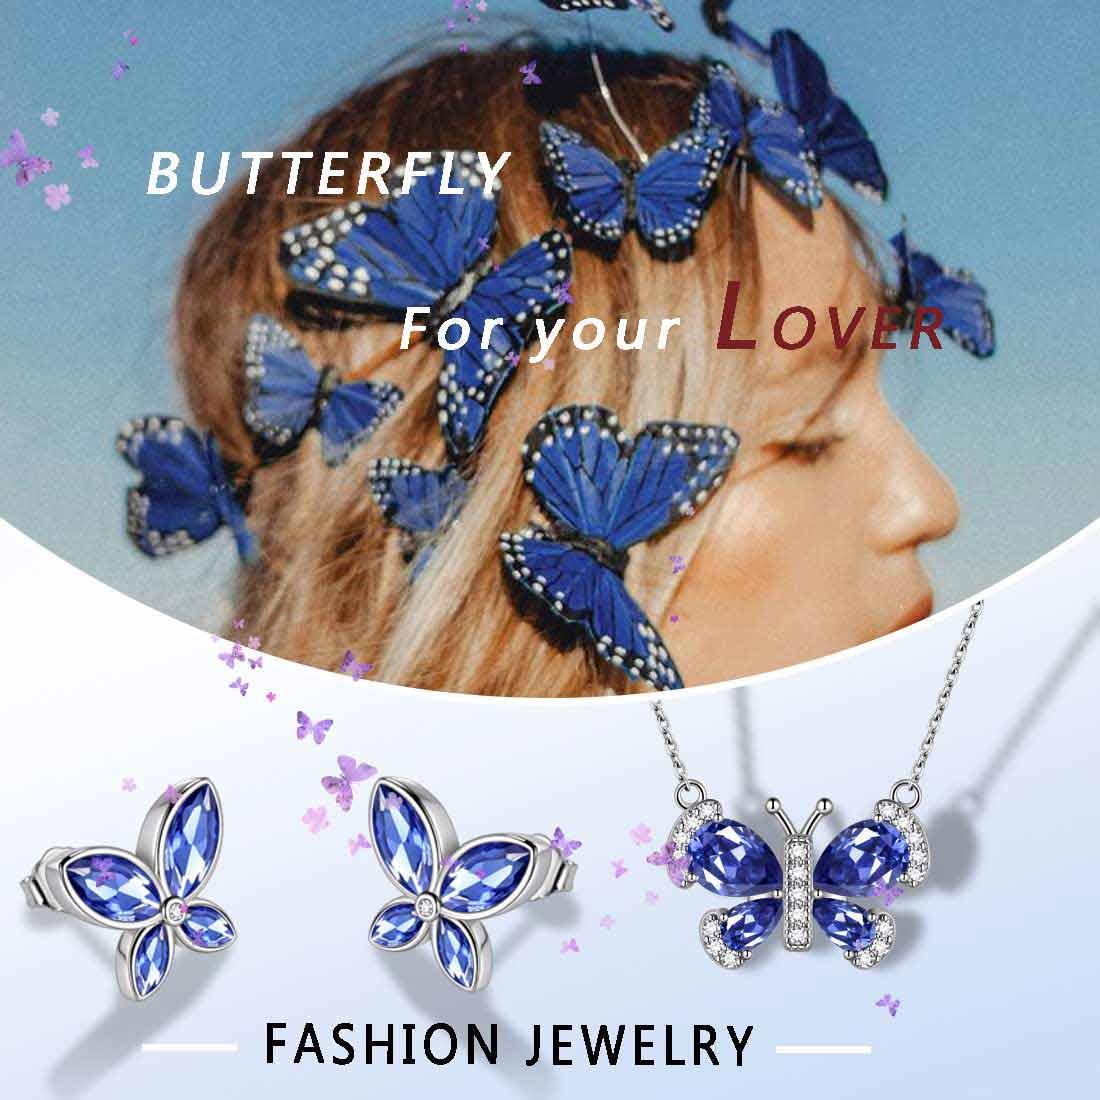 Butterfly Birthstone December Tanzanite Jewelry Set 3PCS - Jewelry Set - Aurora Tears